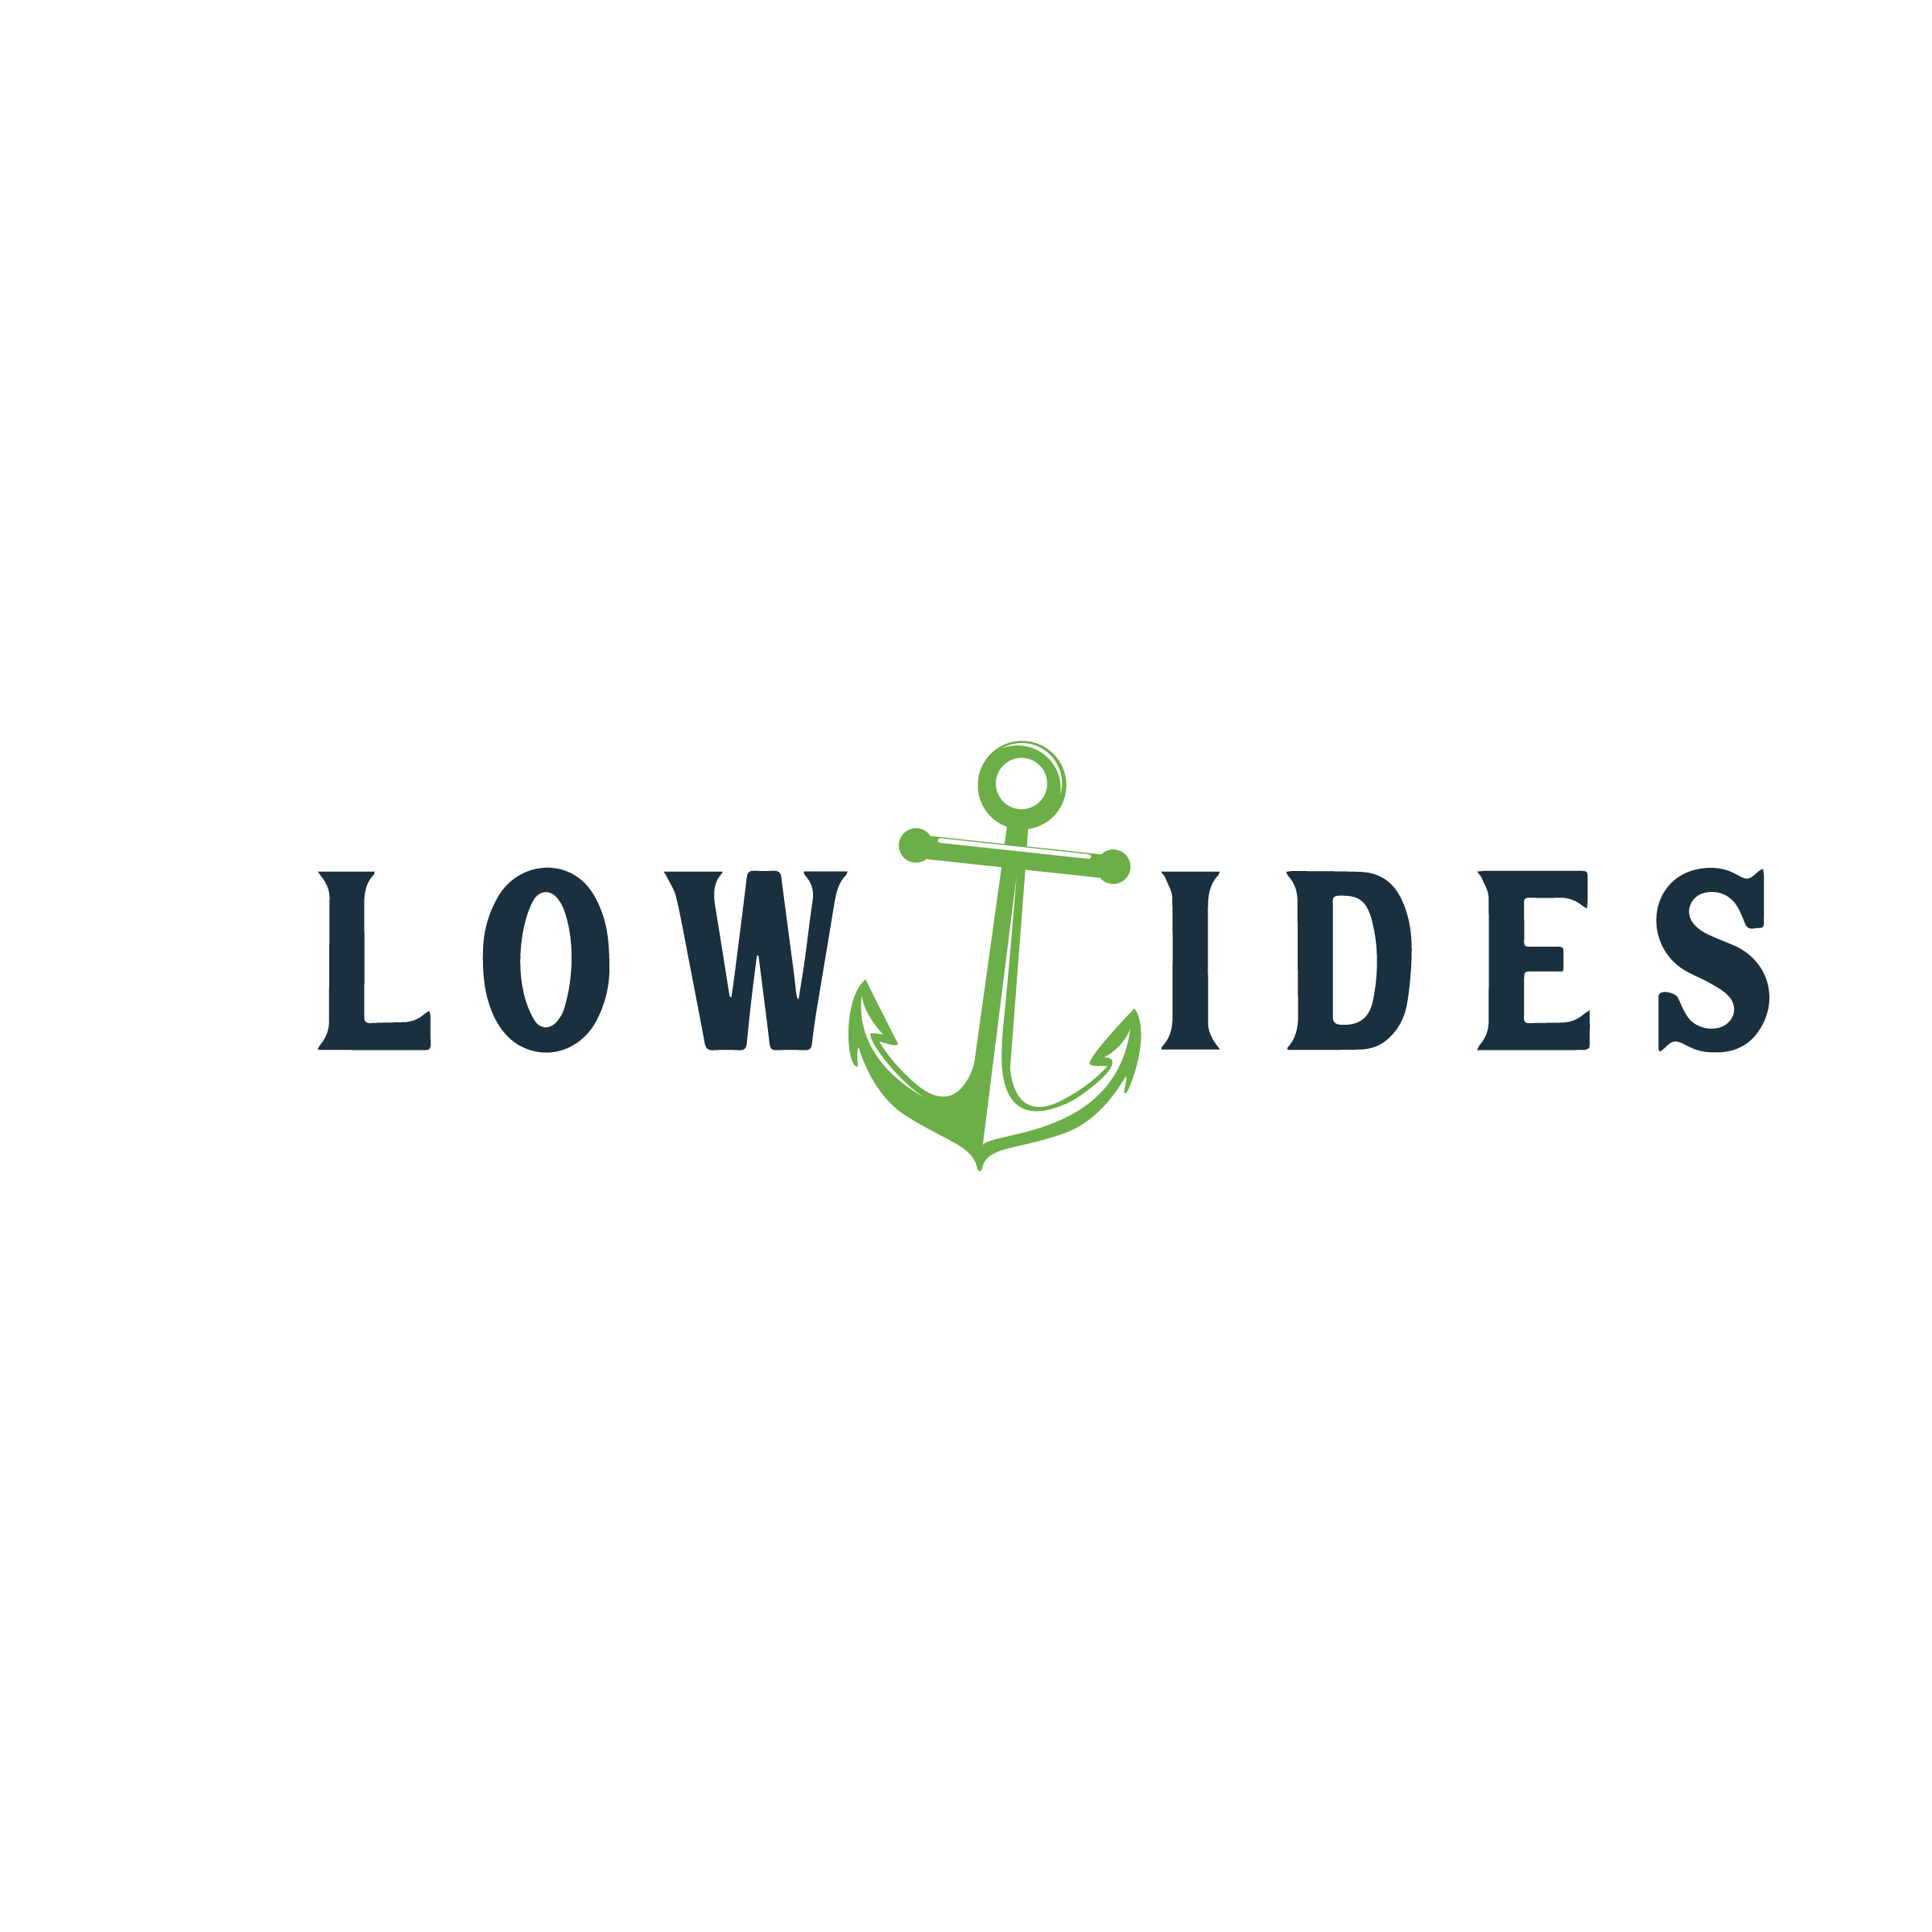 LowTidesOP Logo_final22-01.png